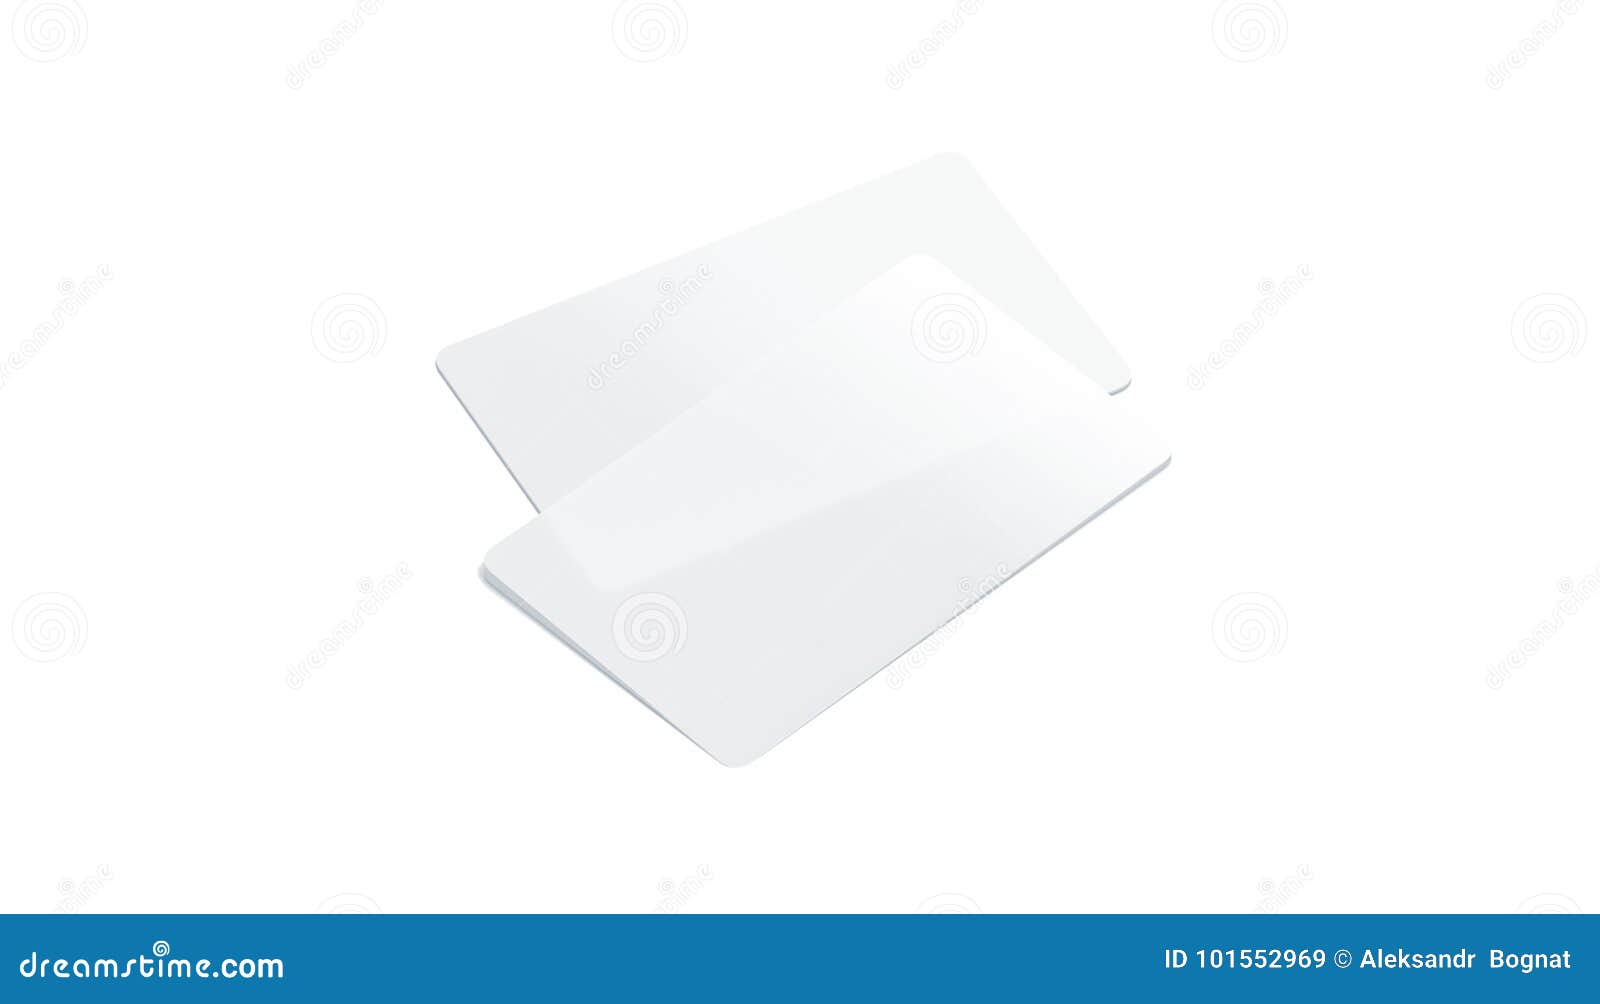 Blank Plastic Transparent Business Cards Mockup Stock Image In Transparent Business Cards Template